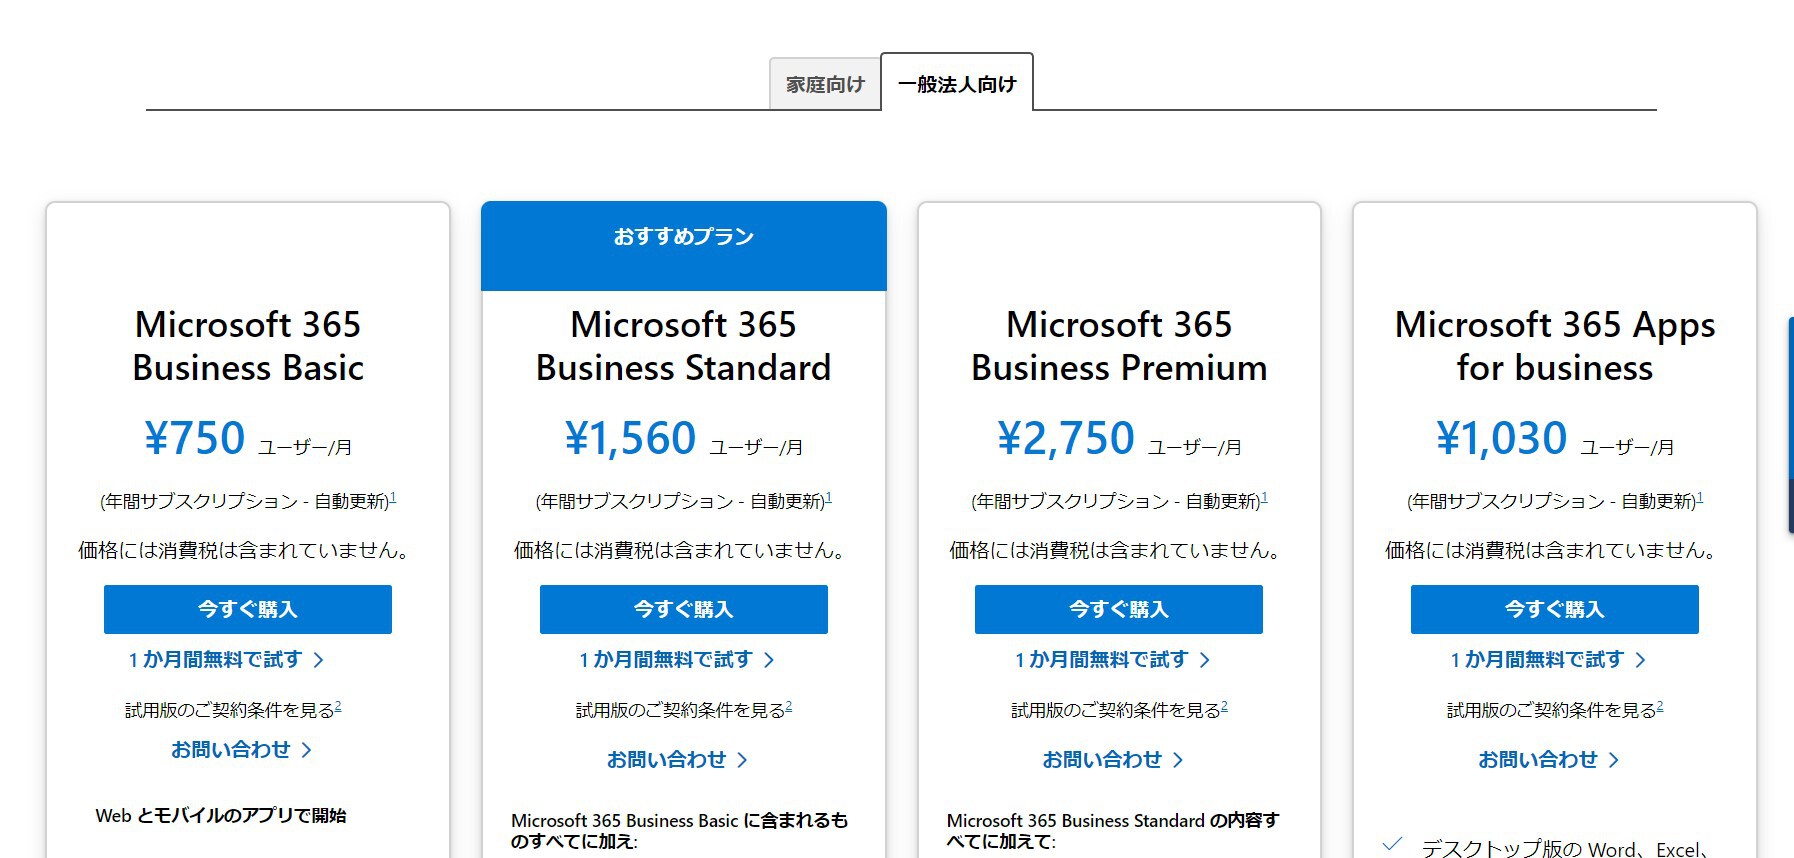 Microsoft 365-1